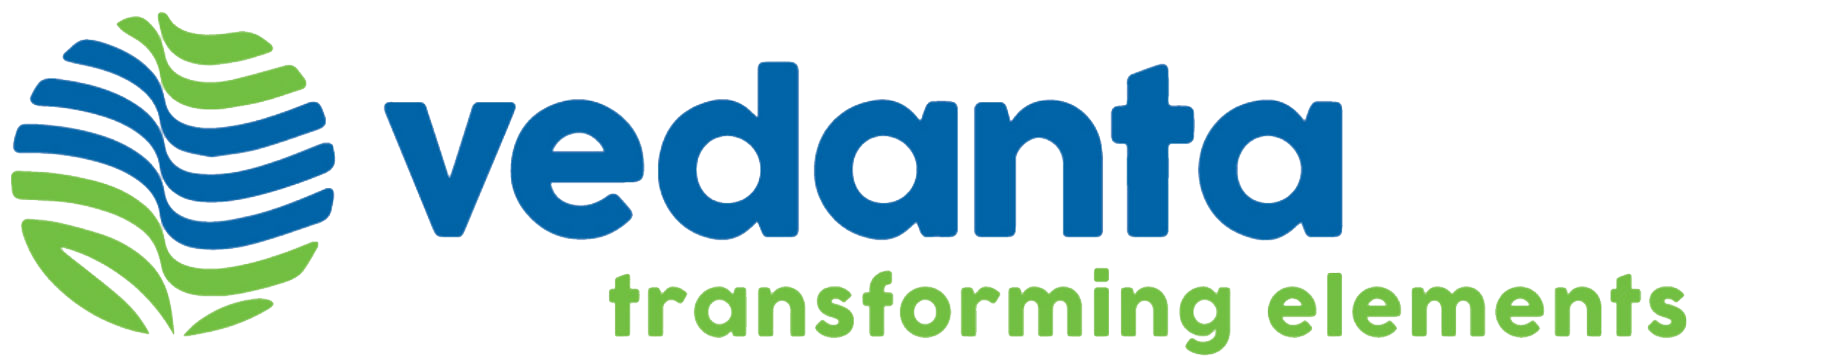 Vedanta Resources Brand Logo